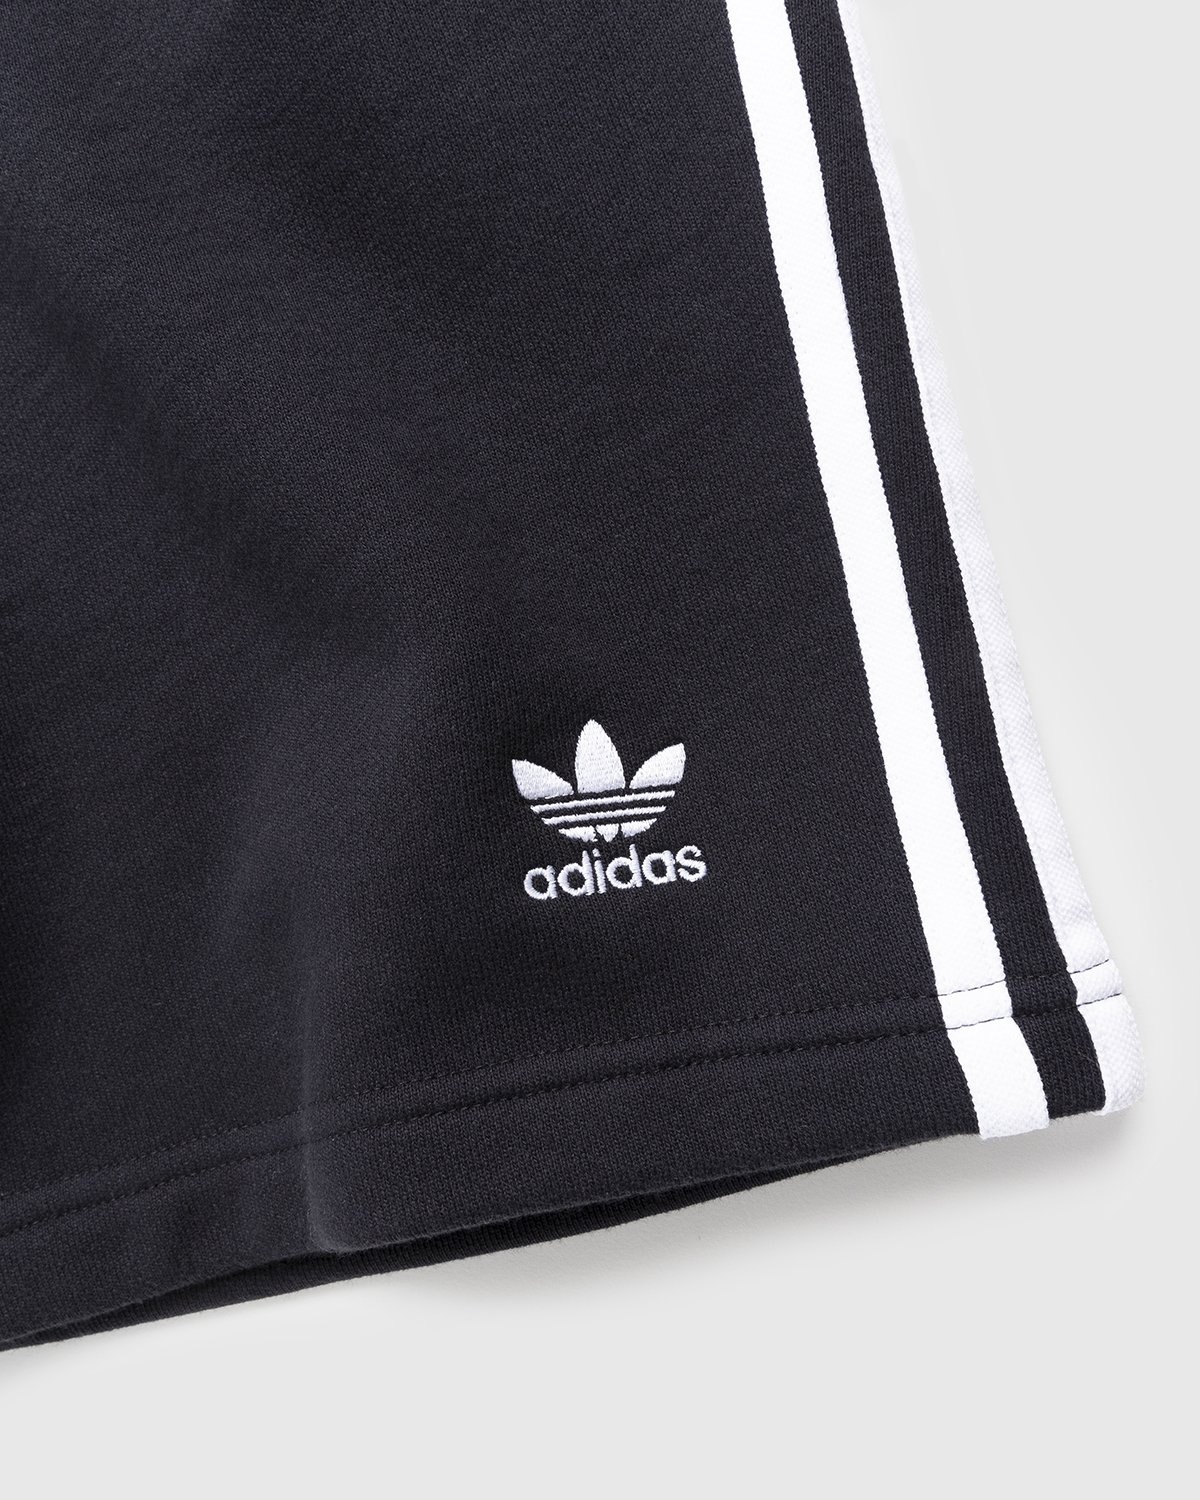 Adidas – 3 Stripe Short Black - Sweatshorts - Black - Image 3